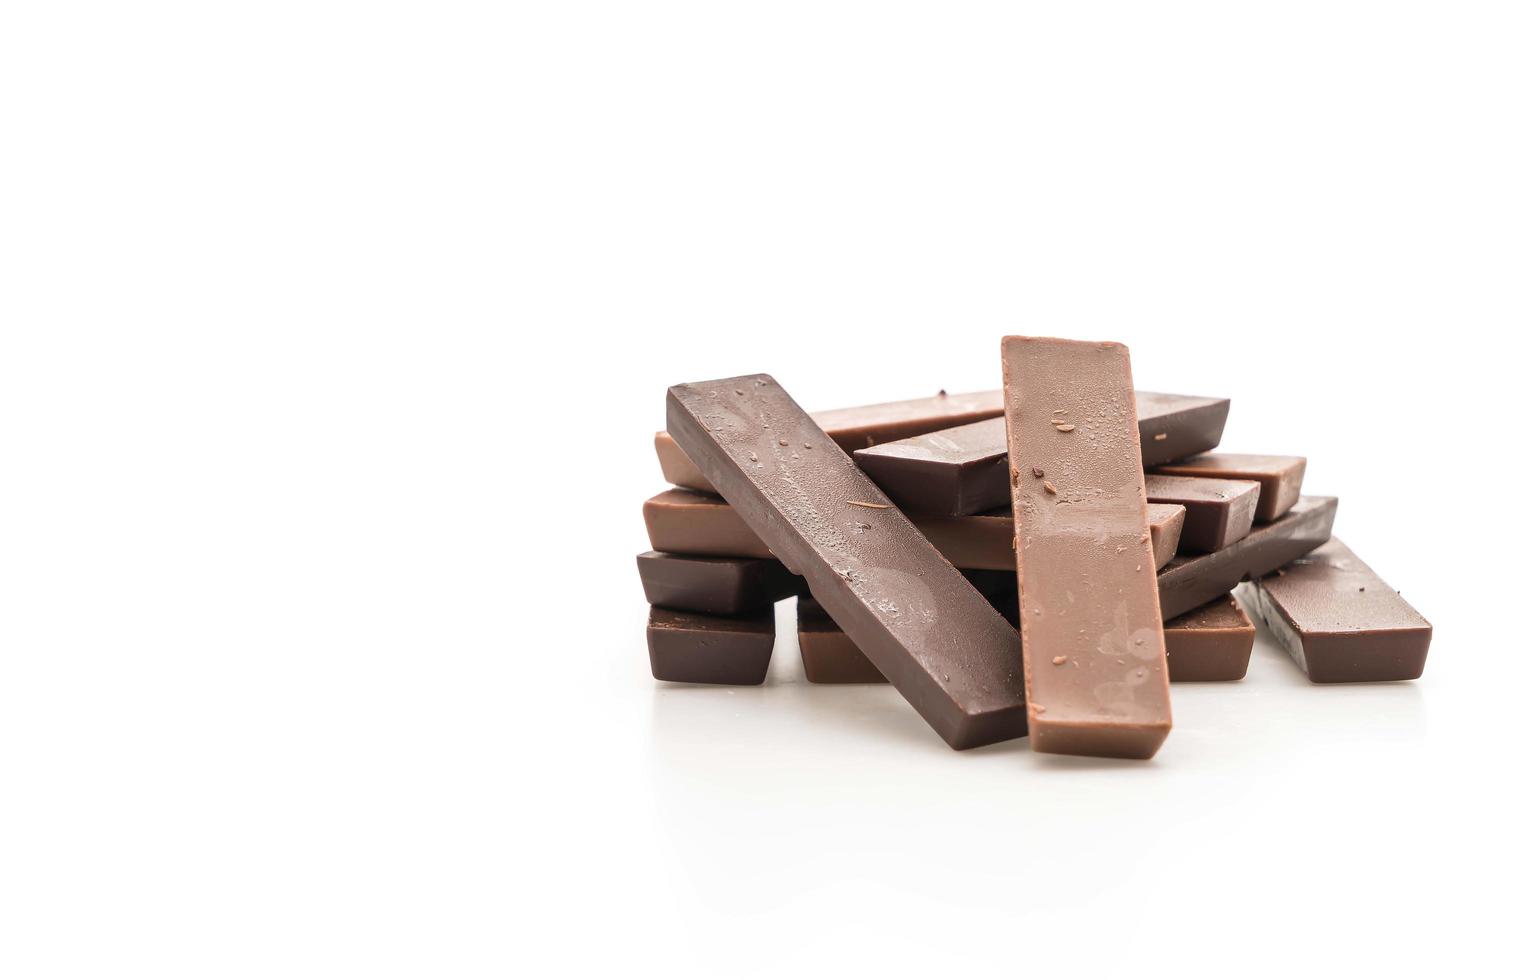 Chocolate bars on white background photo